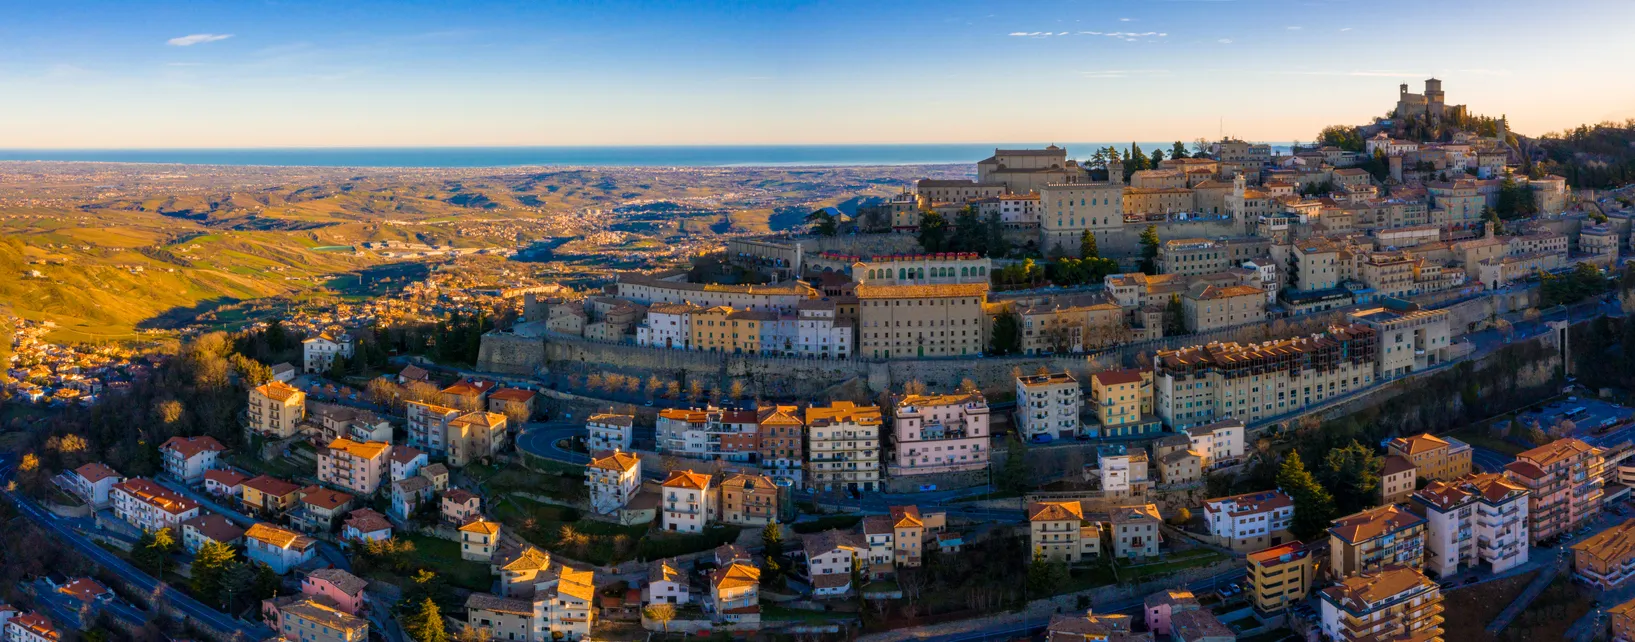 San Marino
© iStock/Ingus Kruklitis